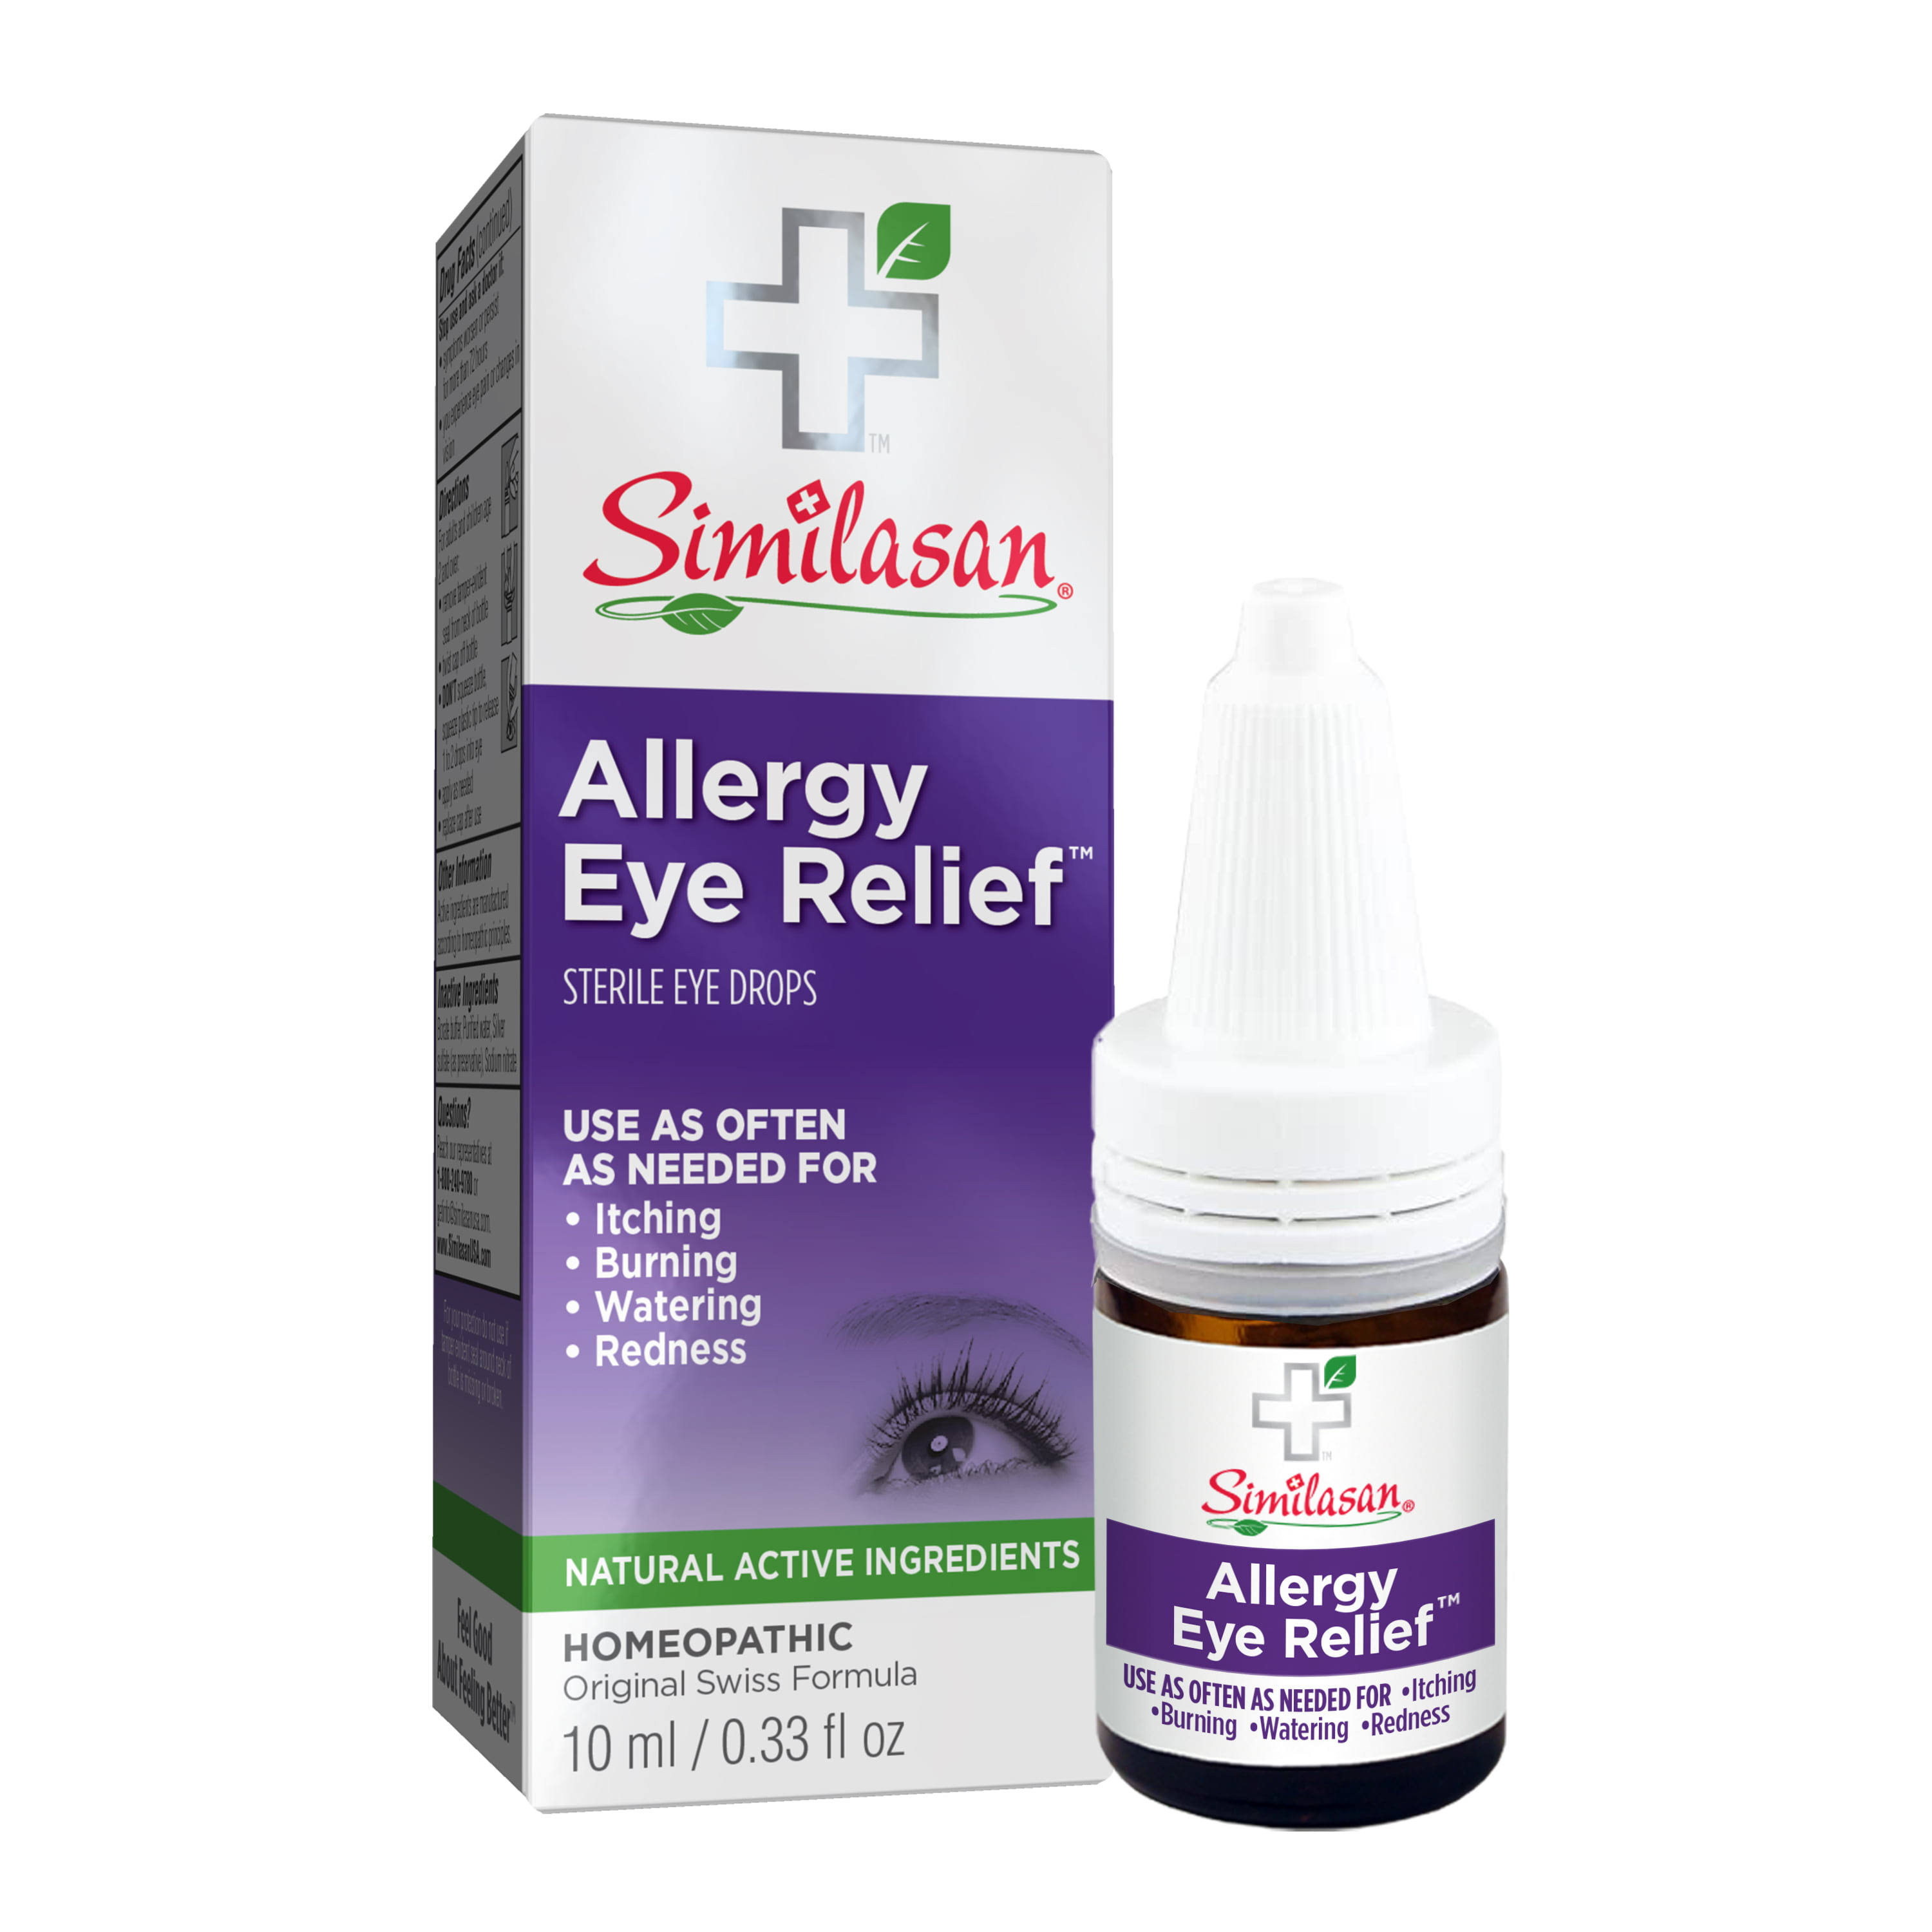 Similasan Allergy Eye Relief Sterile Eye Drops - 0.33oz